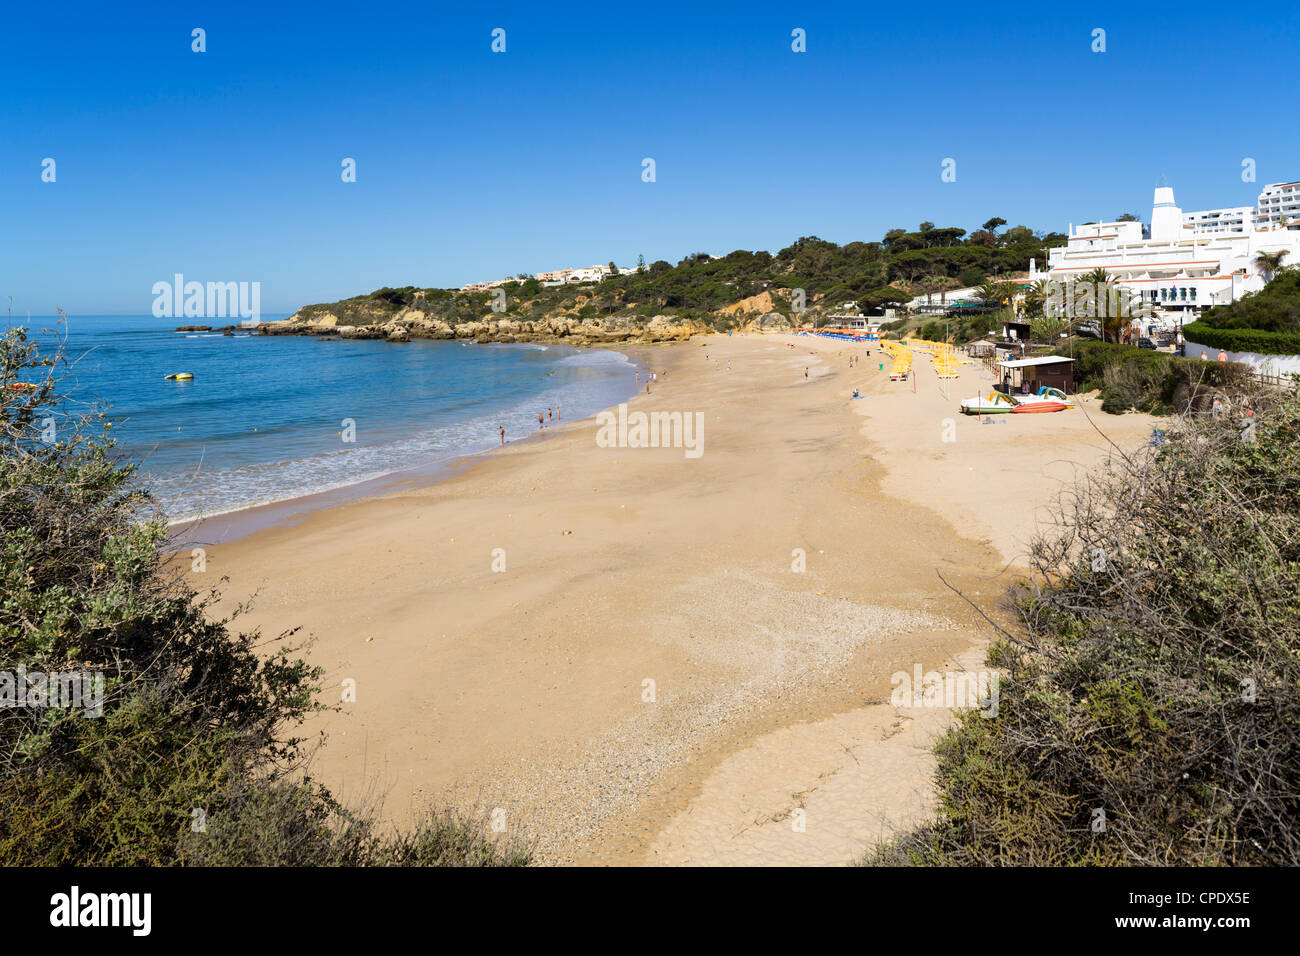 Praia da Oura beach, Albufeira, Algarve, Portugal Stock Photo